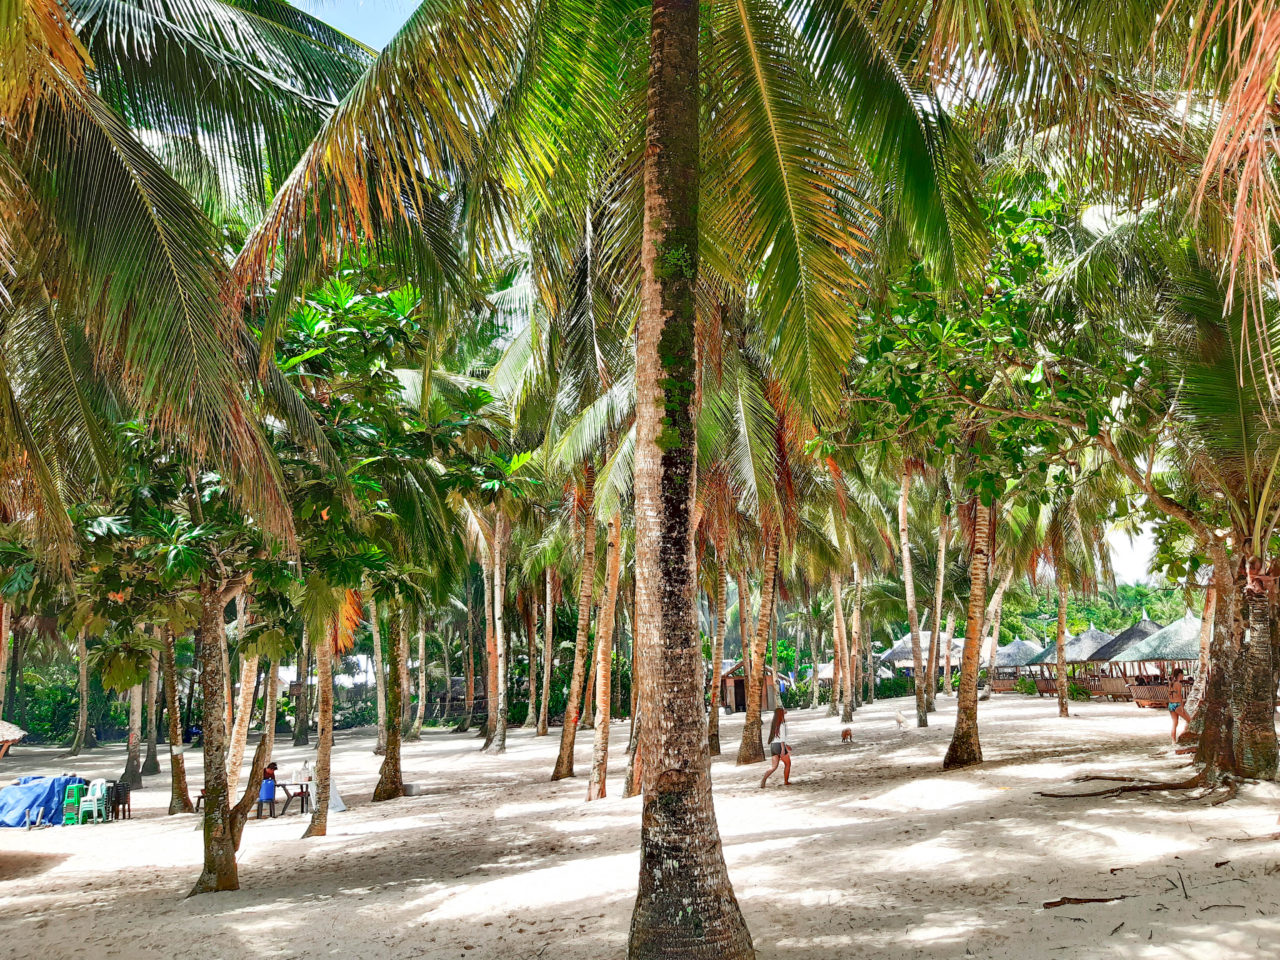 Siargao Day 3: Naked, Daku and Guyam Islands